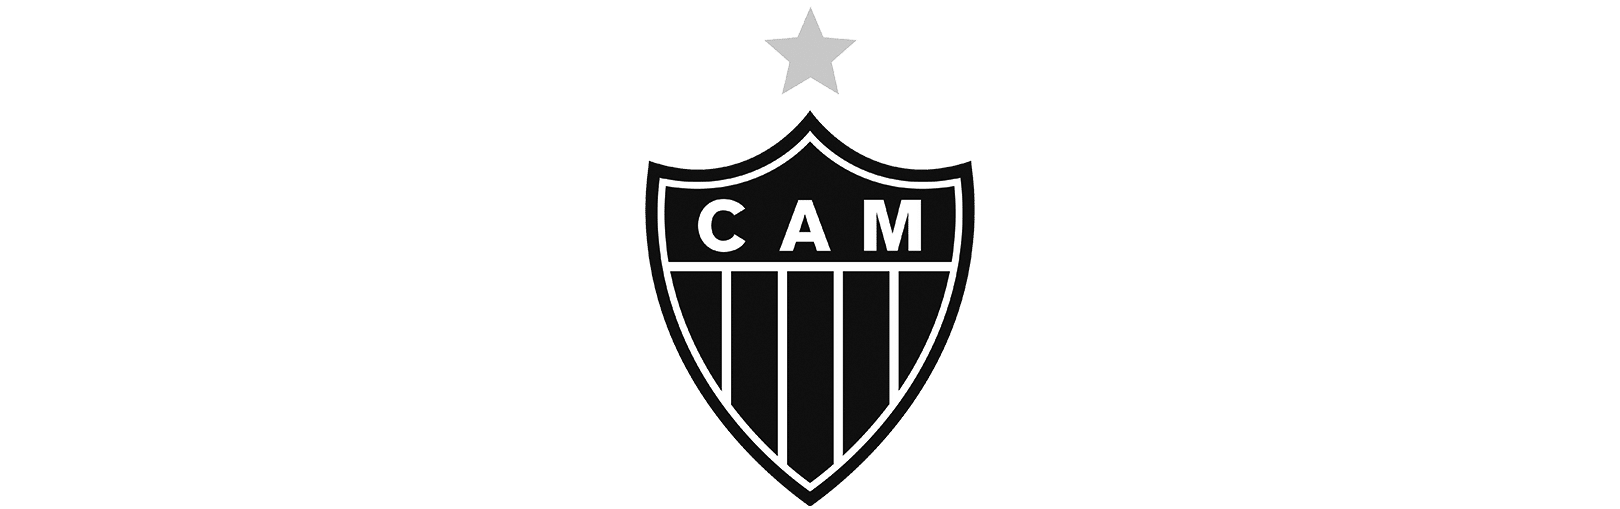 Clube Atletico Mineiro